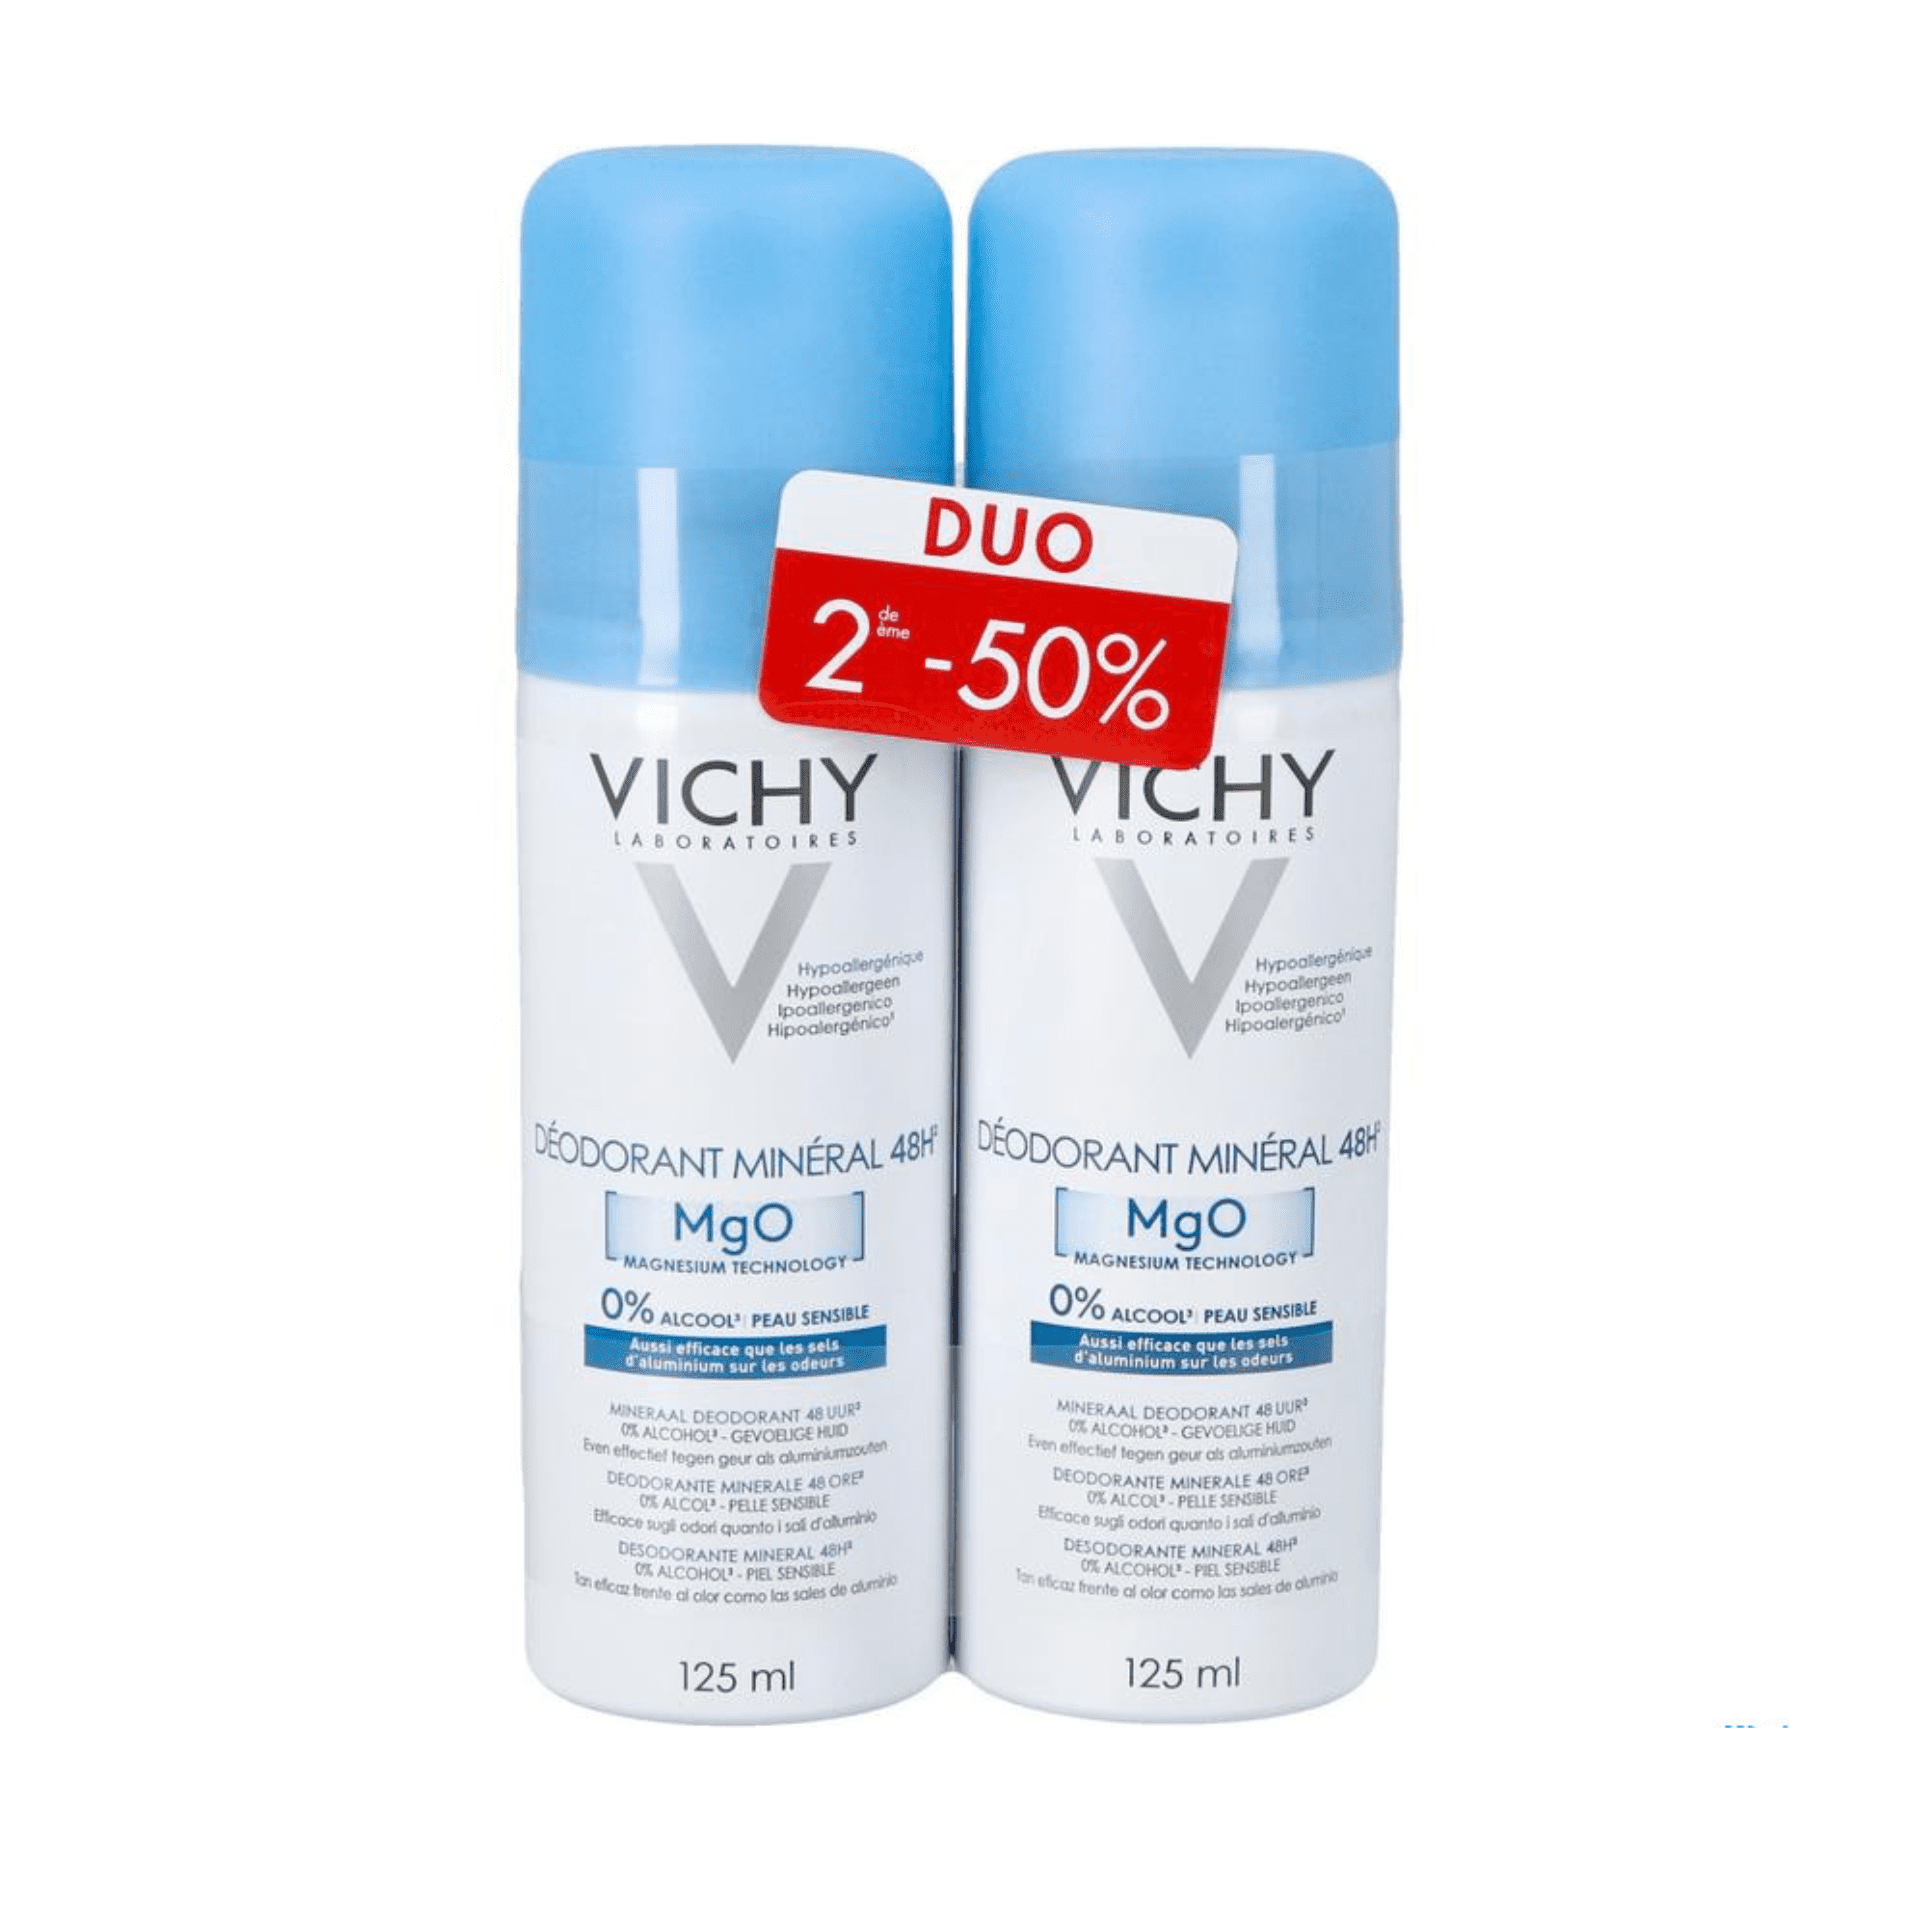 Vichy Deodorant Mineral Aerosol 48h Duo Promo*